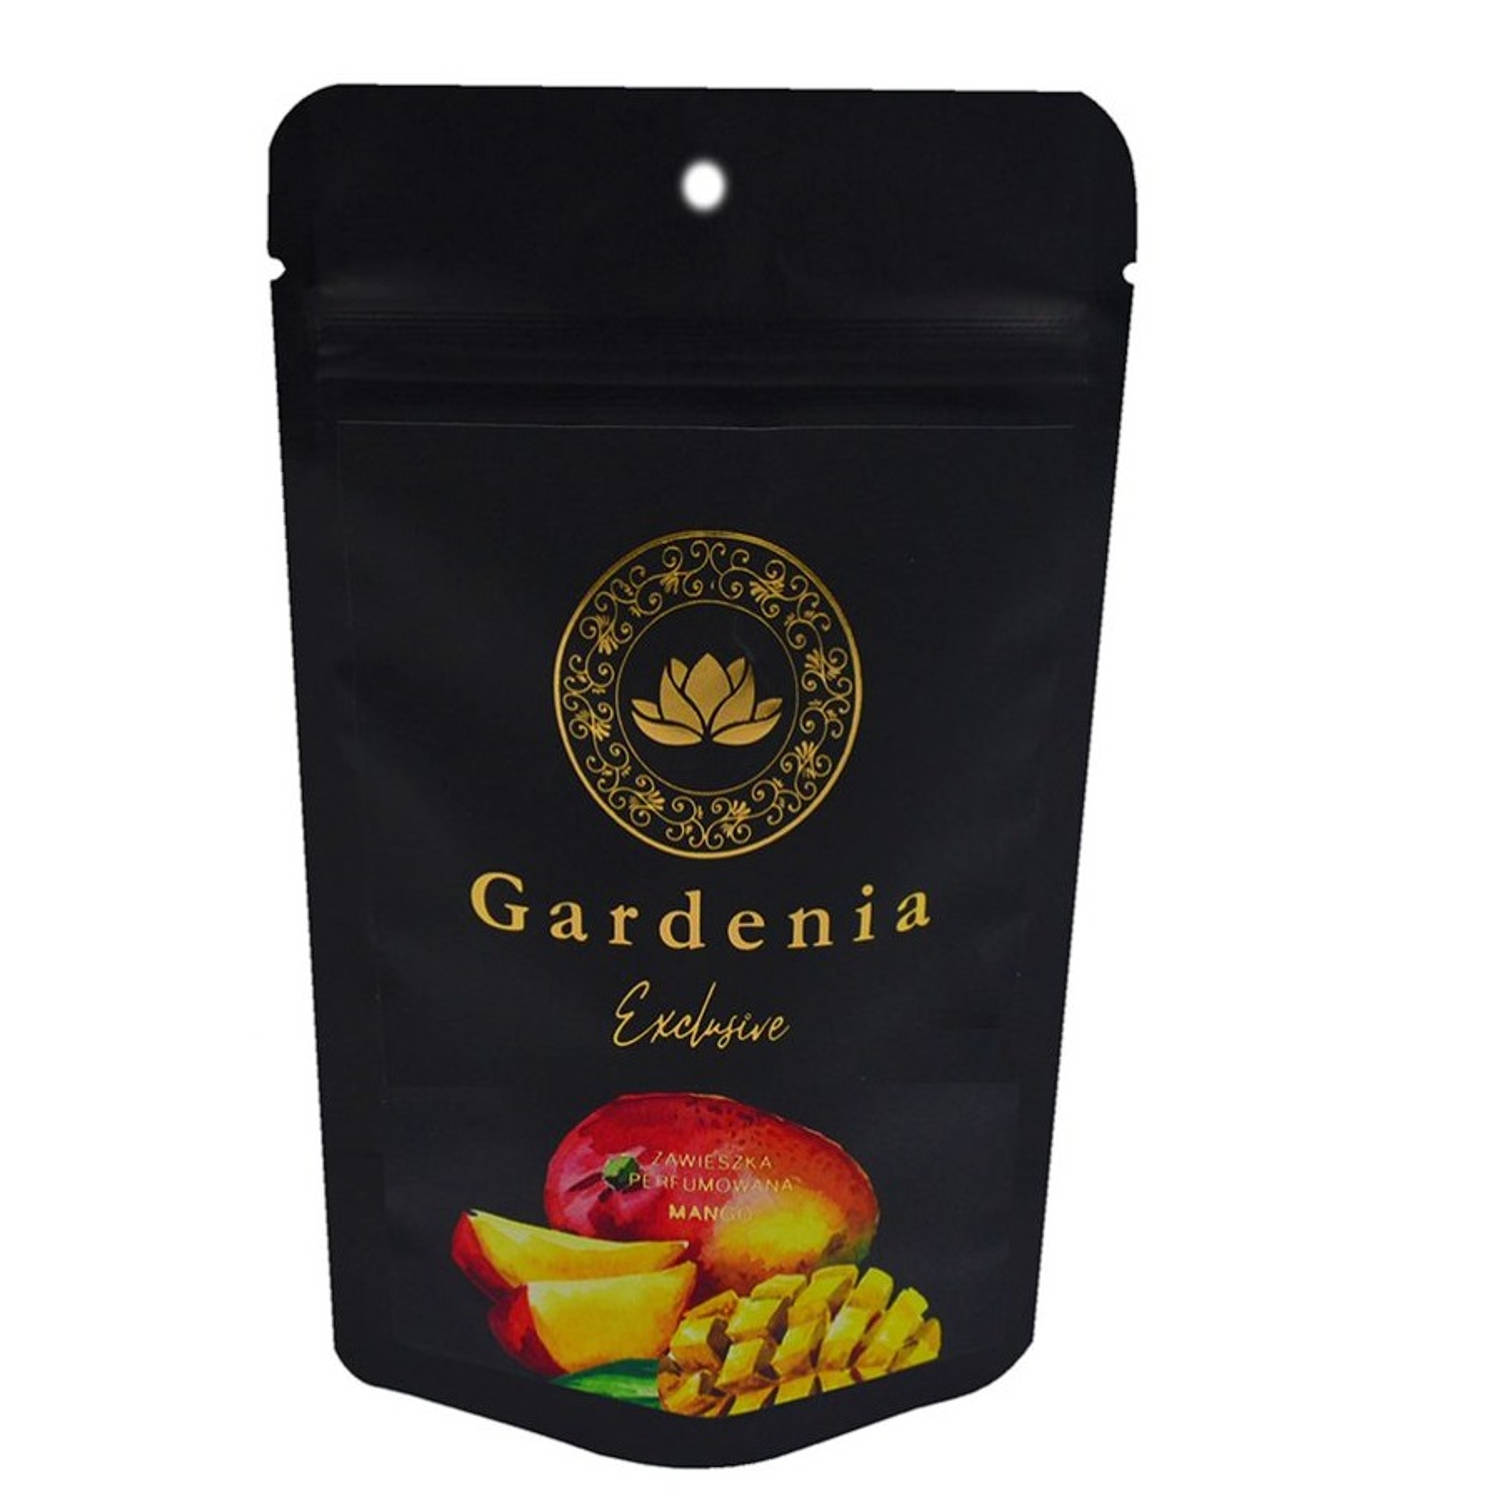 Gardenia Exclusive Mango parfum hanger 6st